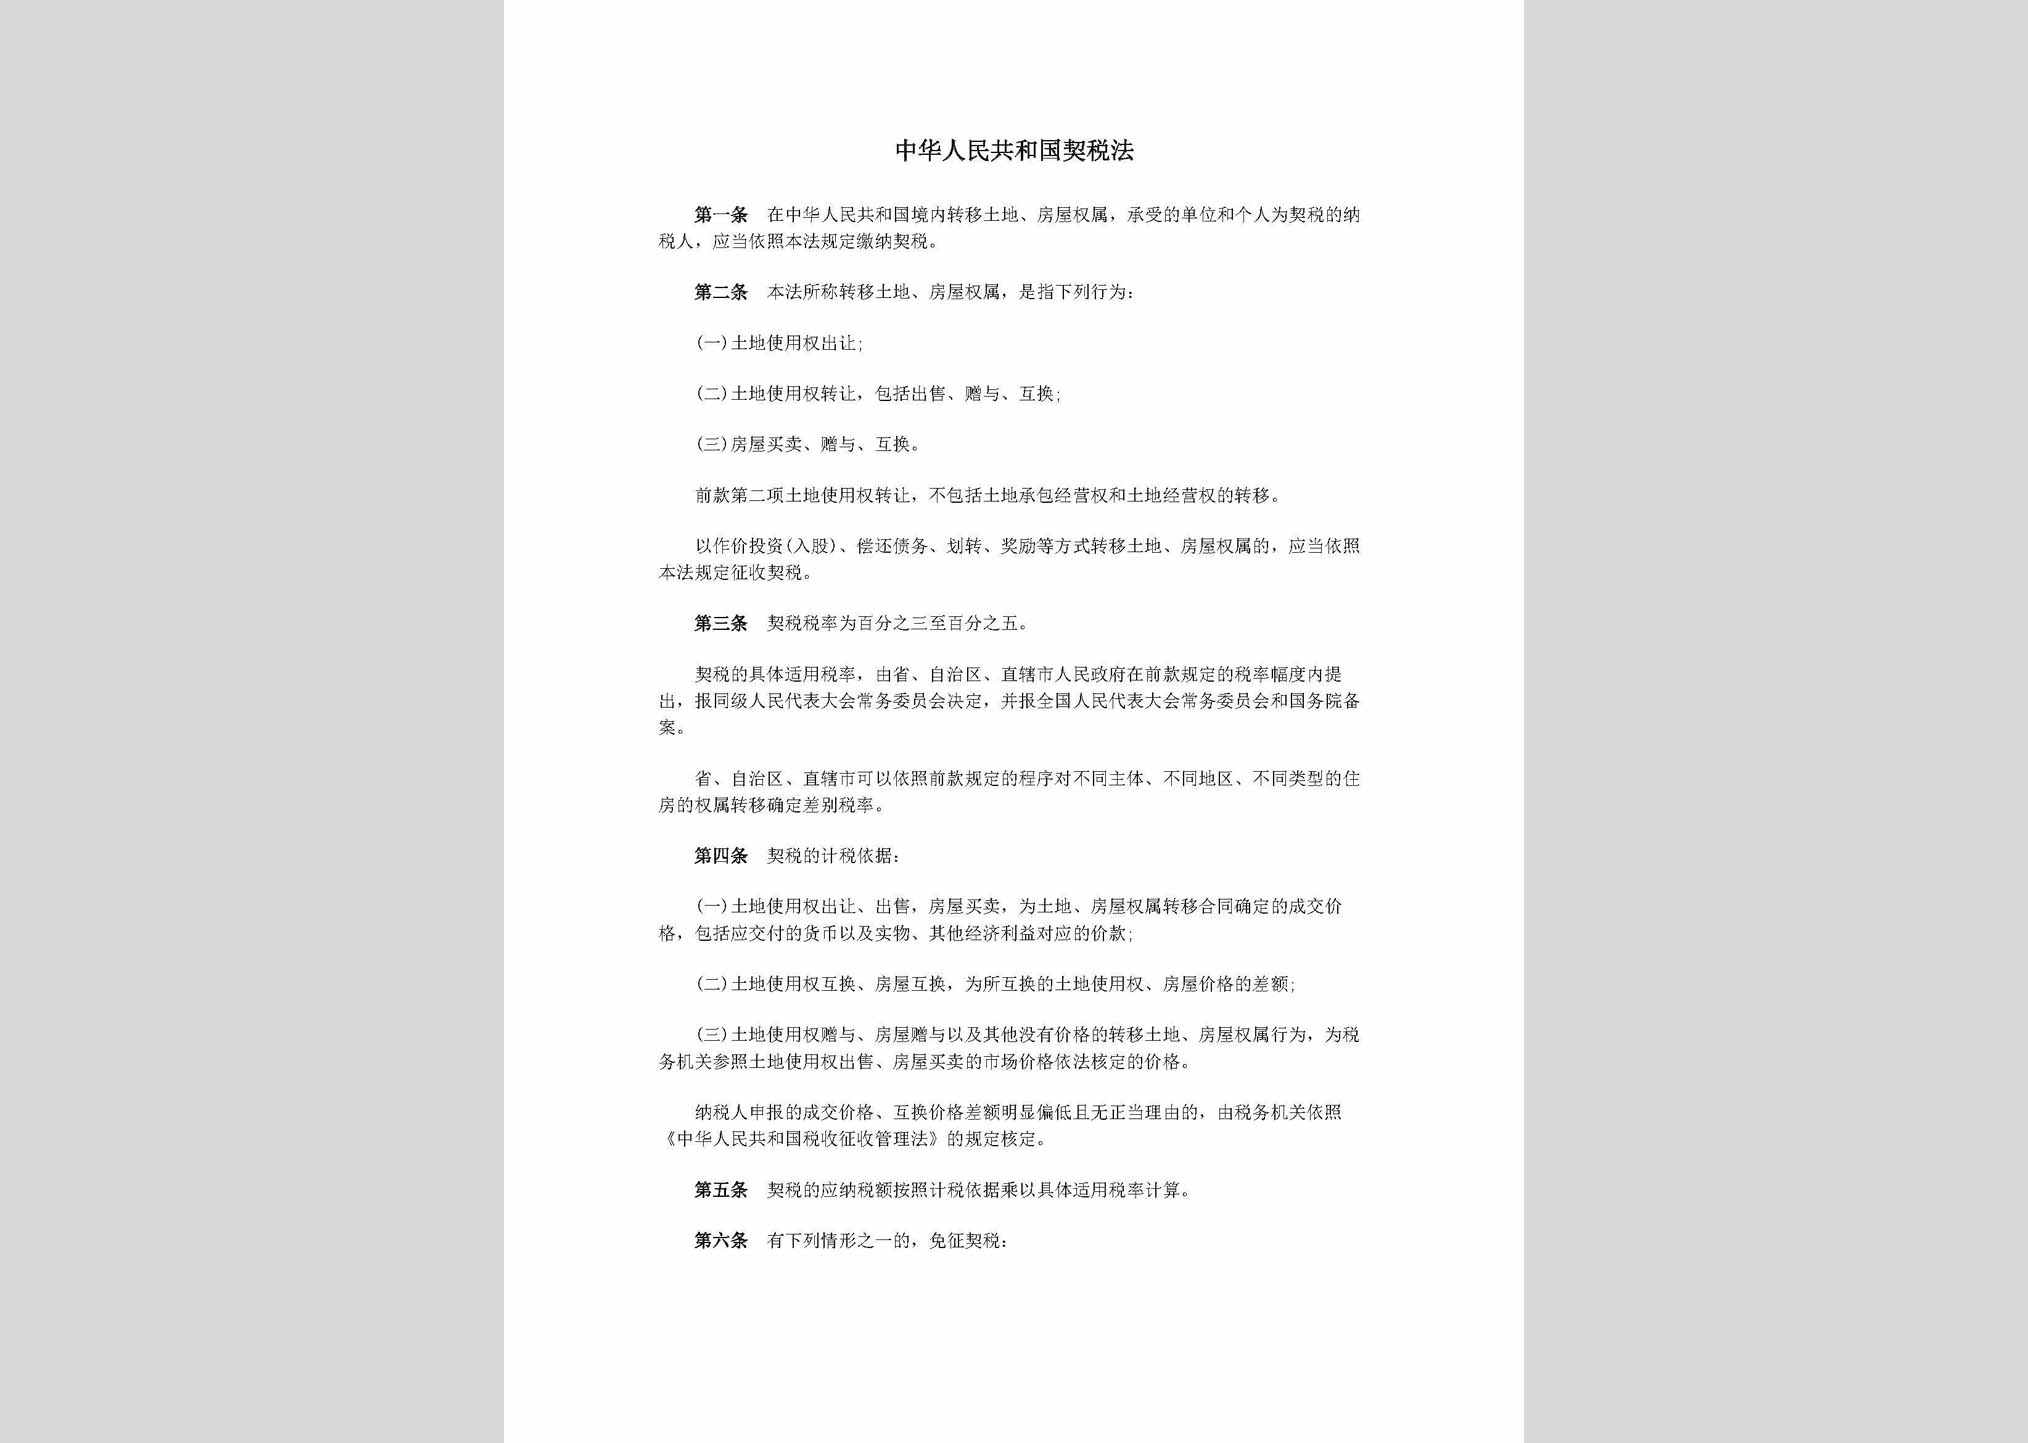 ZHRMGHGQ：中华人民共和国契税法